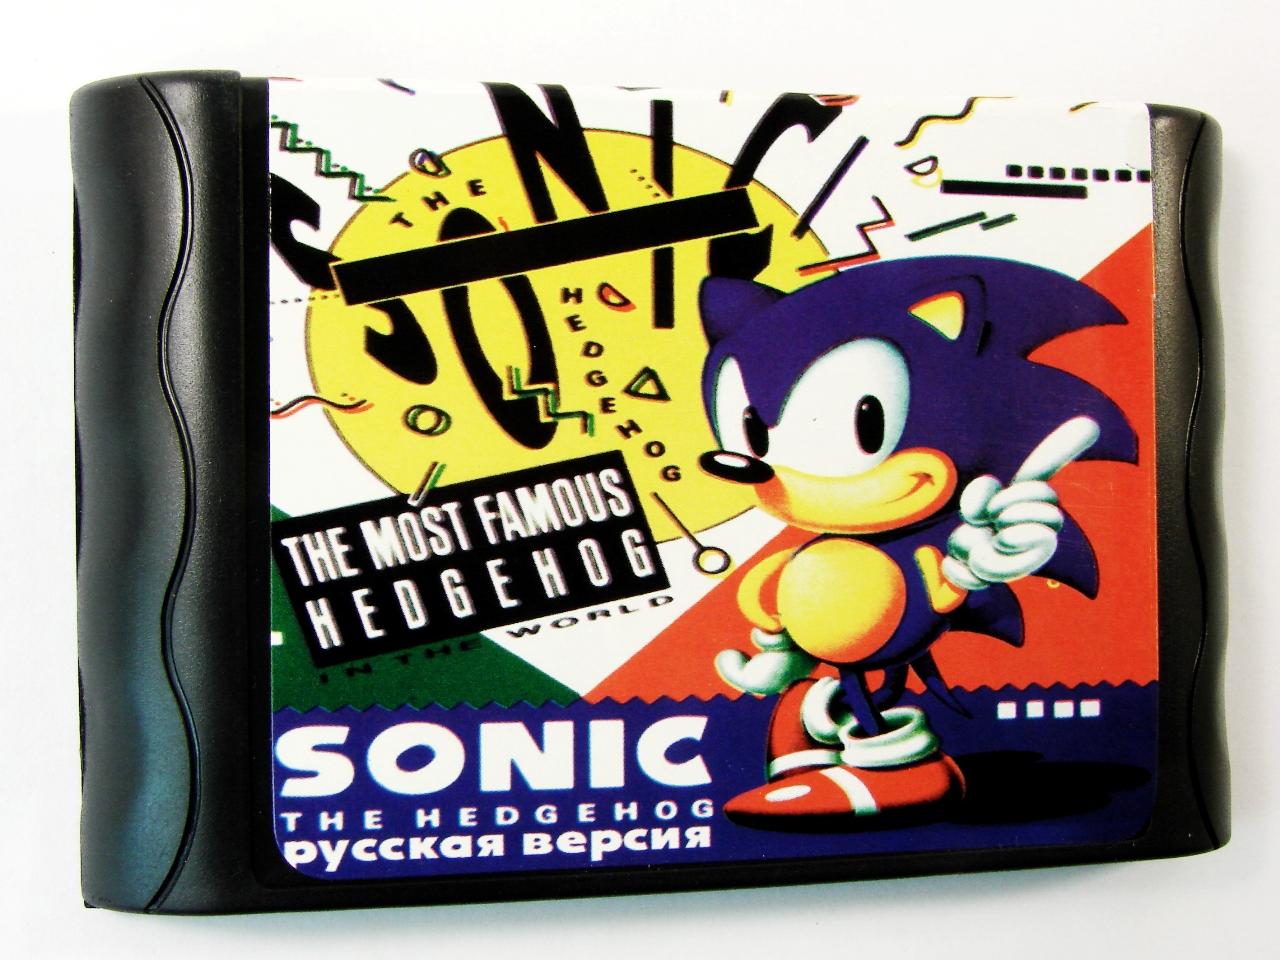   Sega Sonic the hedgehog (Sega)